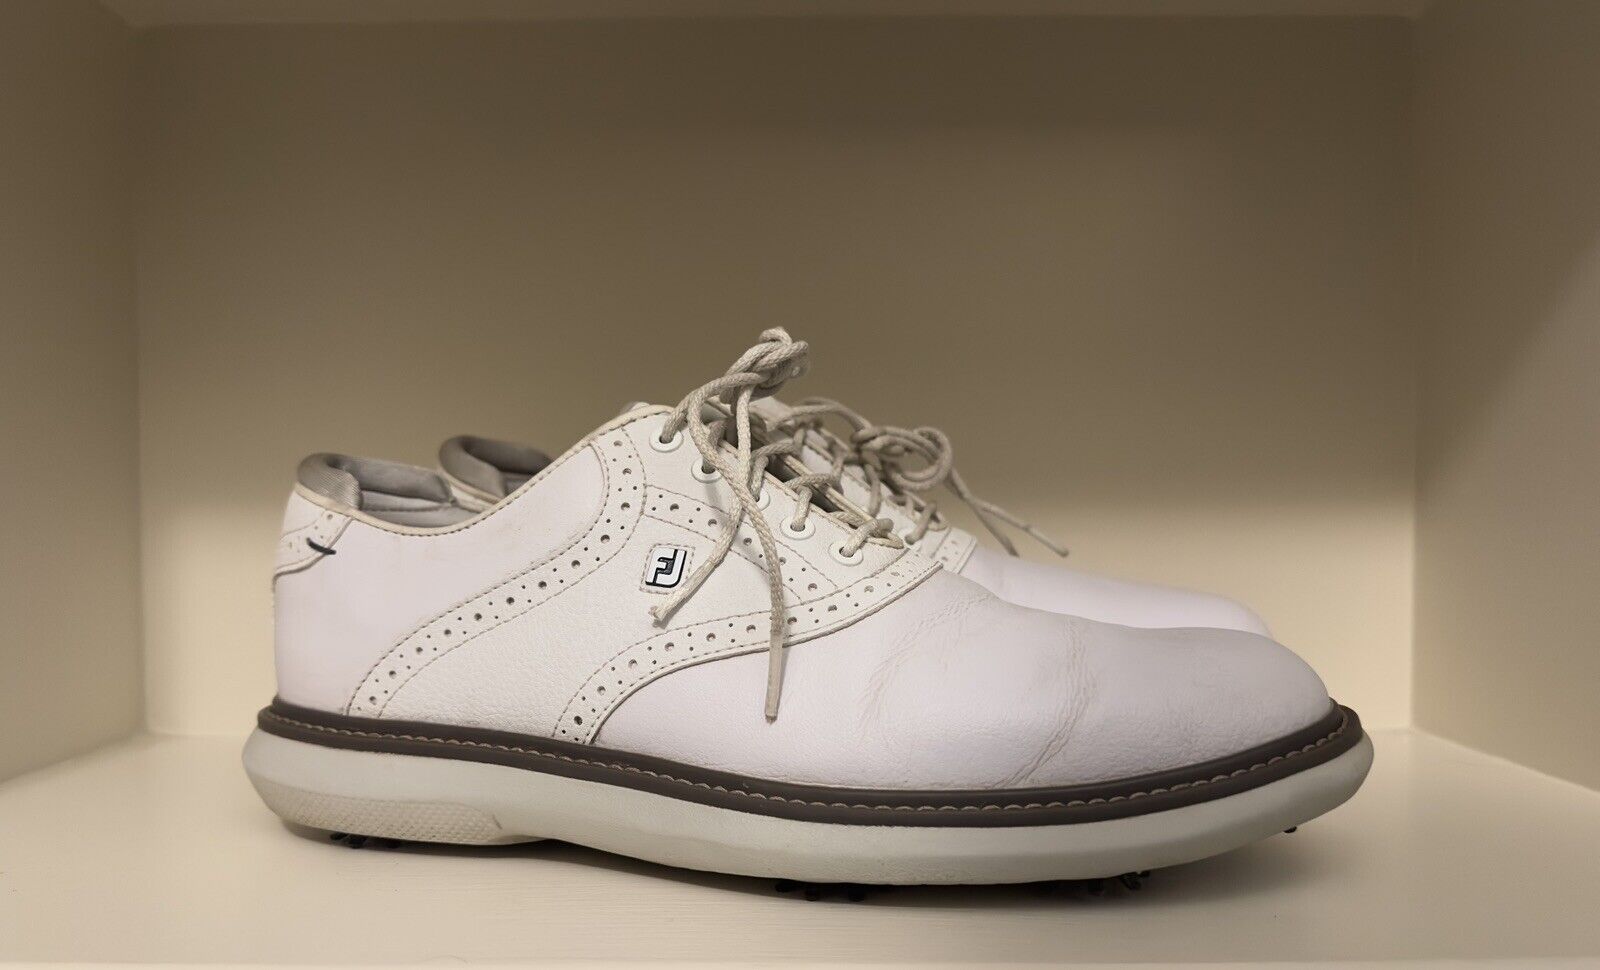 Footjoy (FJ) Men’s Traditions Golf Shoes - White/White - Size 9 ½